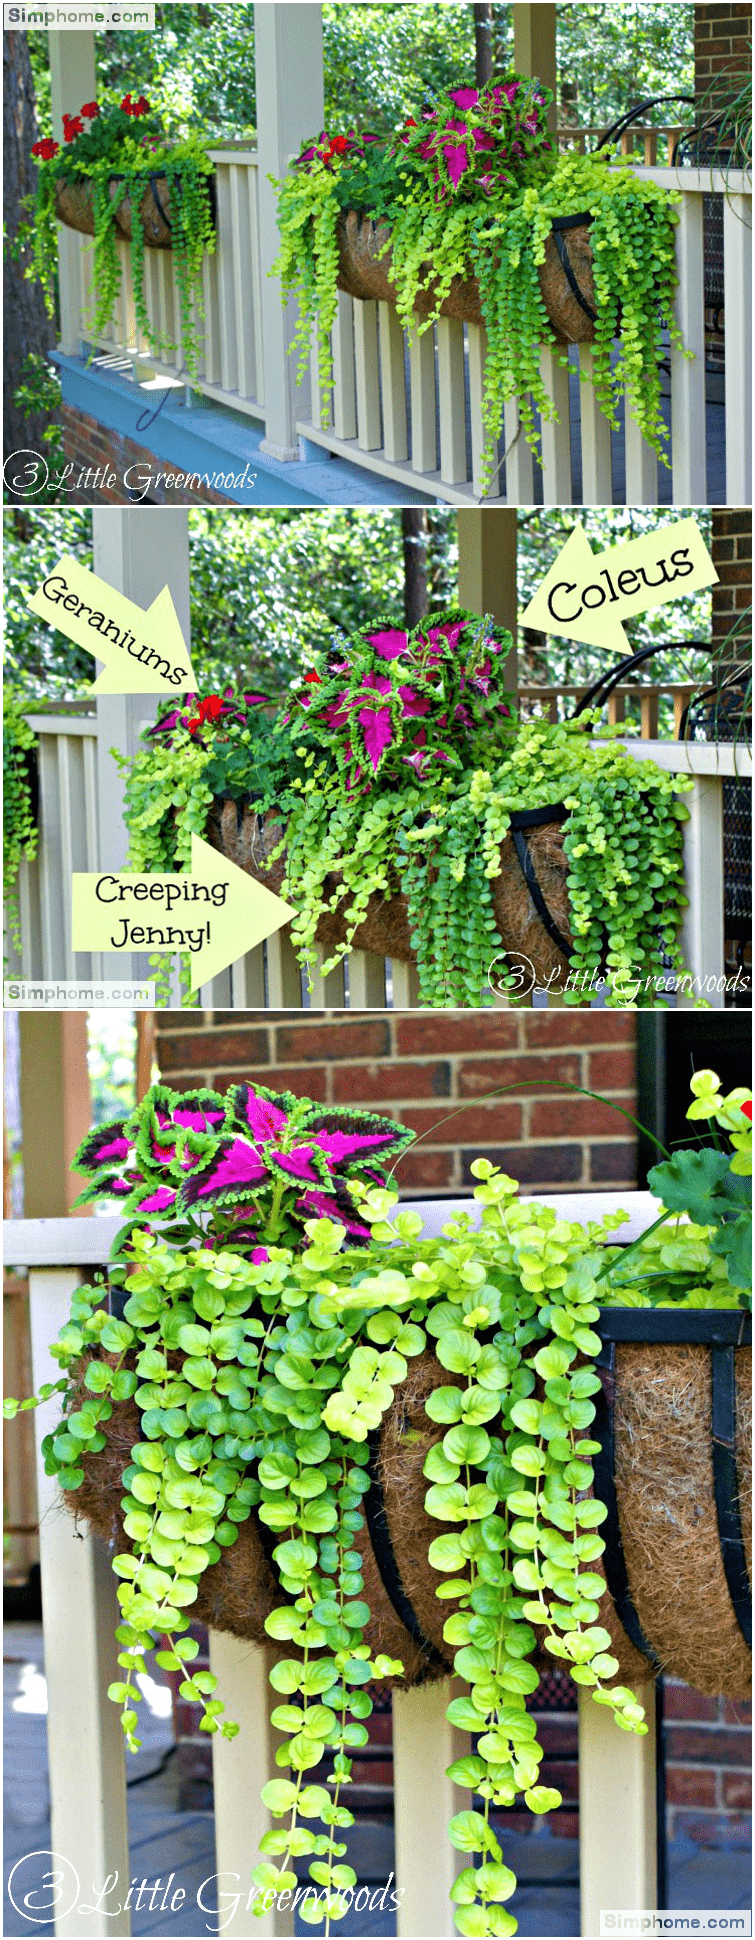 1.Give a Lively Lift with Plants via Simphome.com